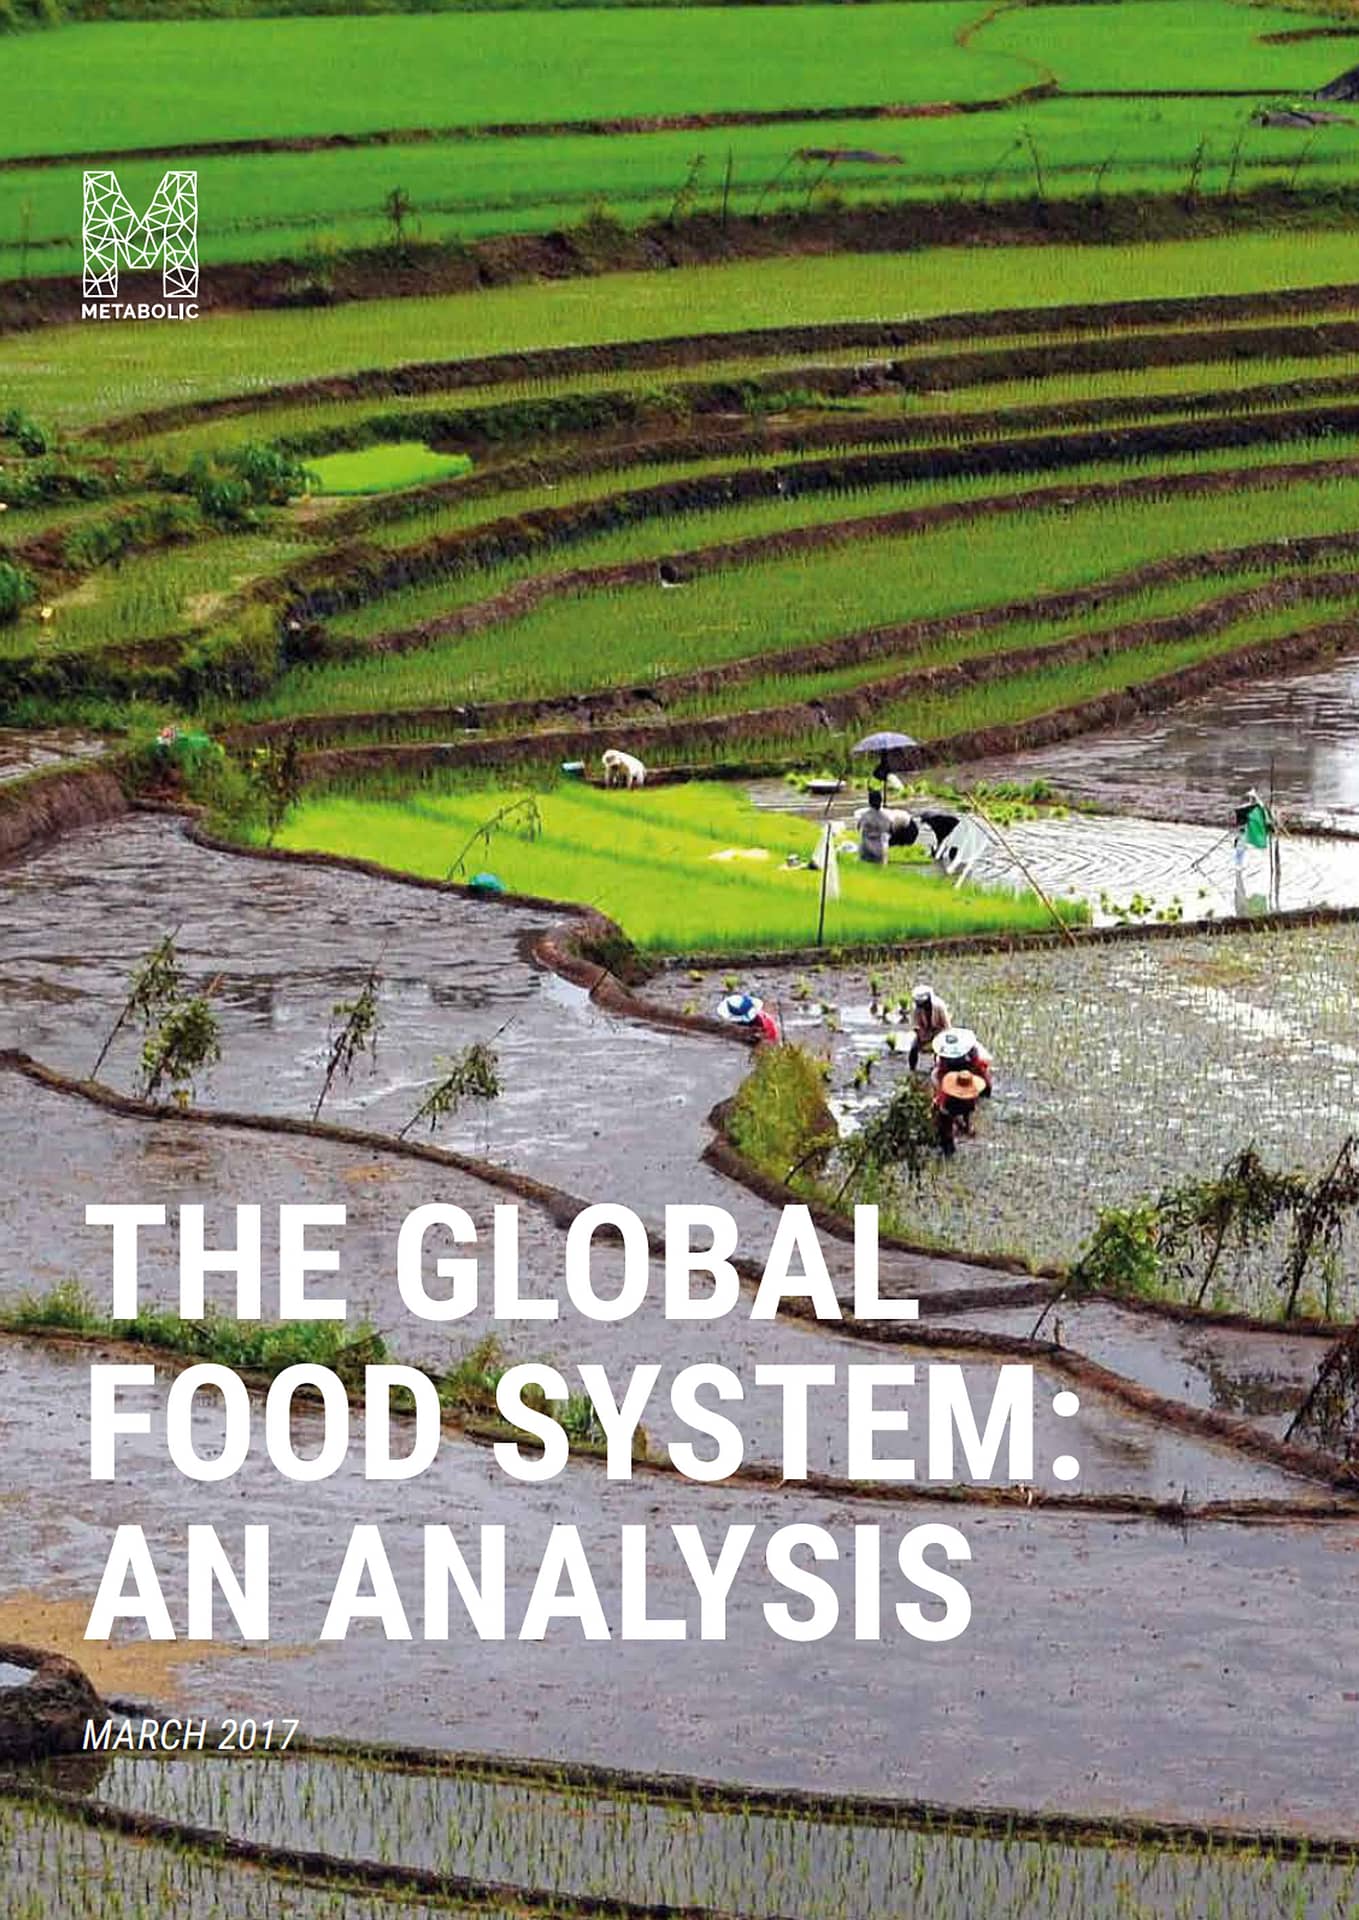 https://mlombw7jtauz.i.optimole.com/cb:i-DS~f076/w:auto/h:auto/q:mauto/ig:avif/f:best/http://www.metabolic.nl/wp-content/uploads/2019/02/Analysis_of_the_Global_Food_System_cover.jpg